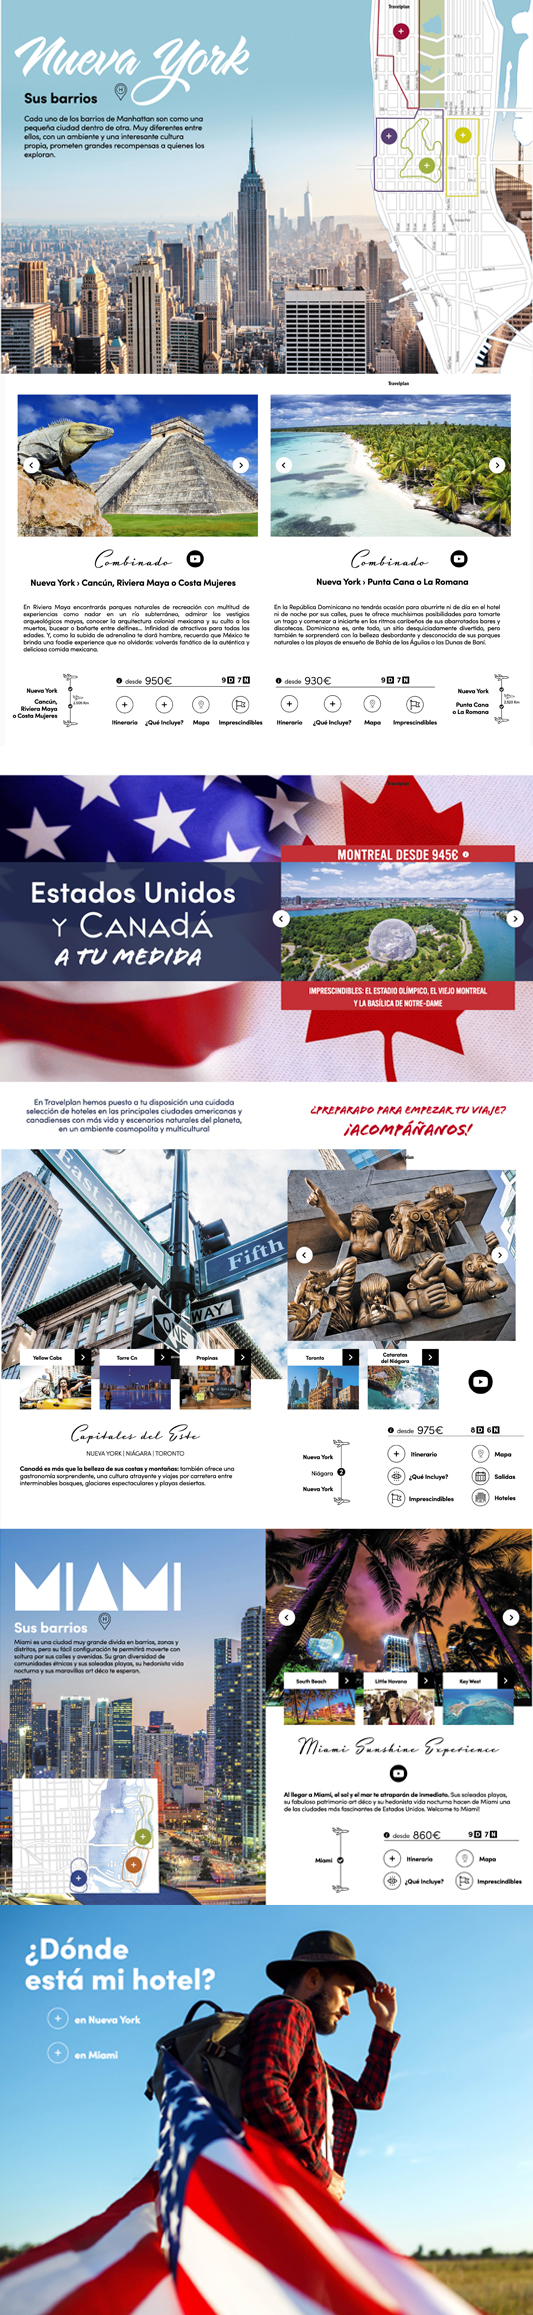 eMagazine Travelplan USA y Canadá